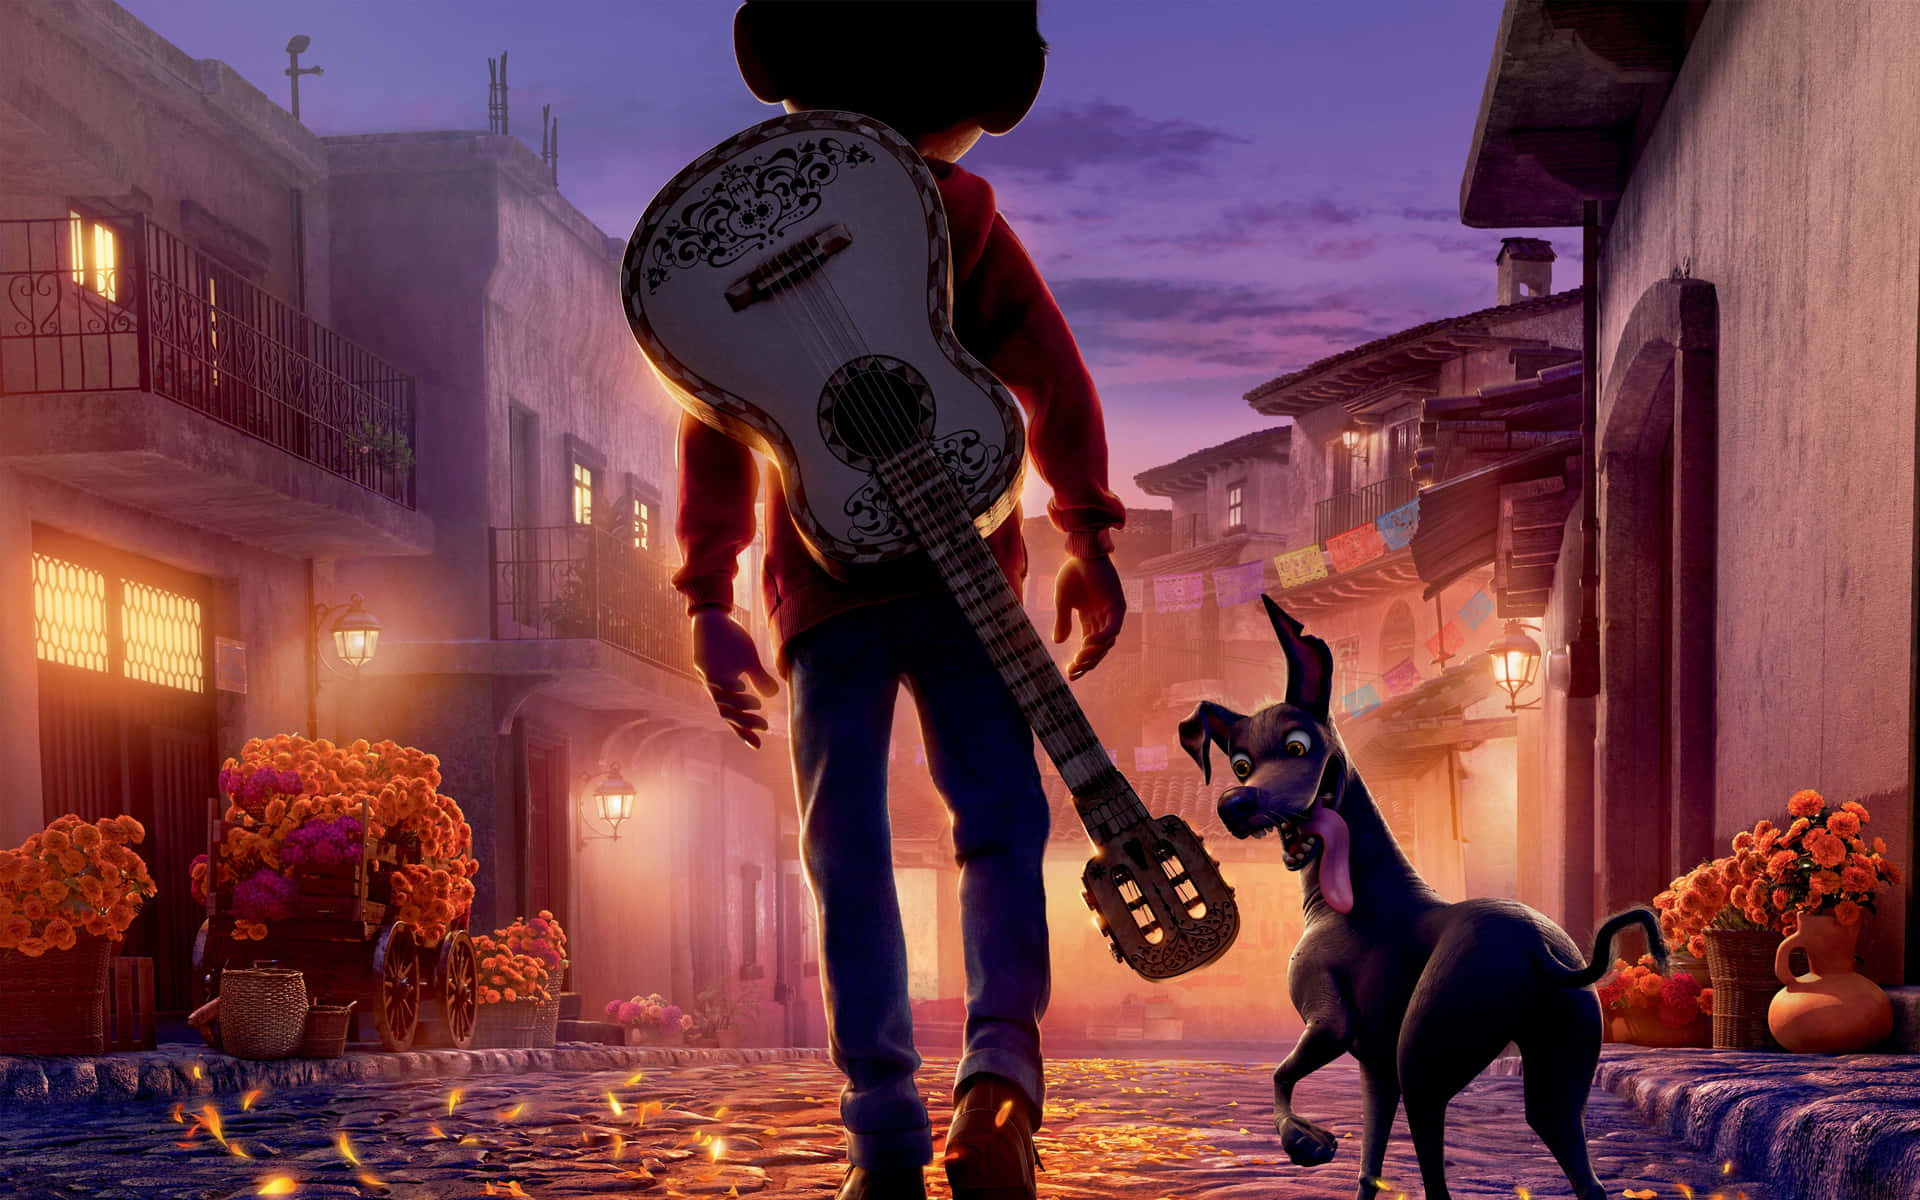 Entranella Terra Dei Morti Con Una Memorabile Avventura In Disney•pixar's 